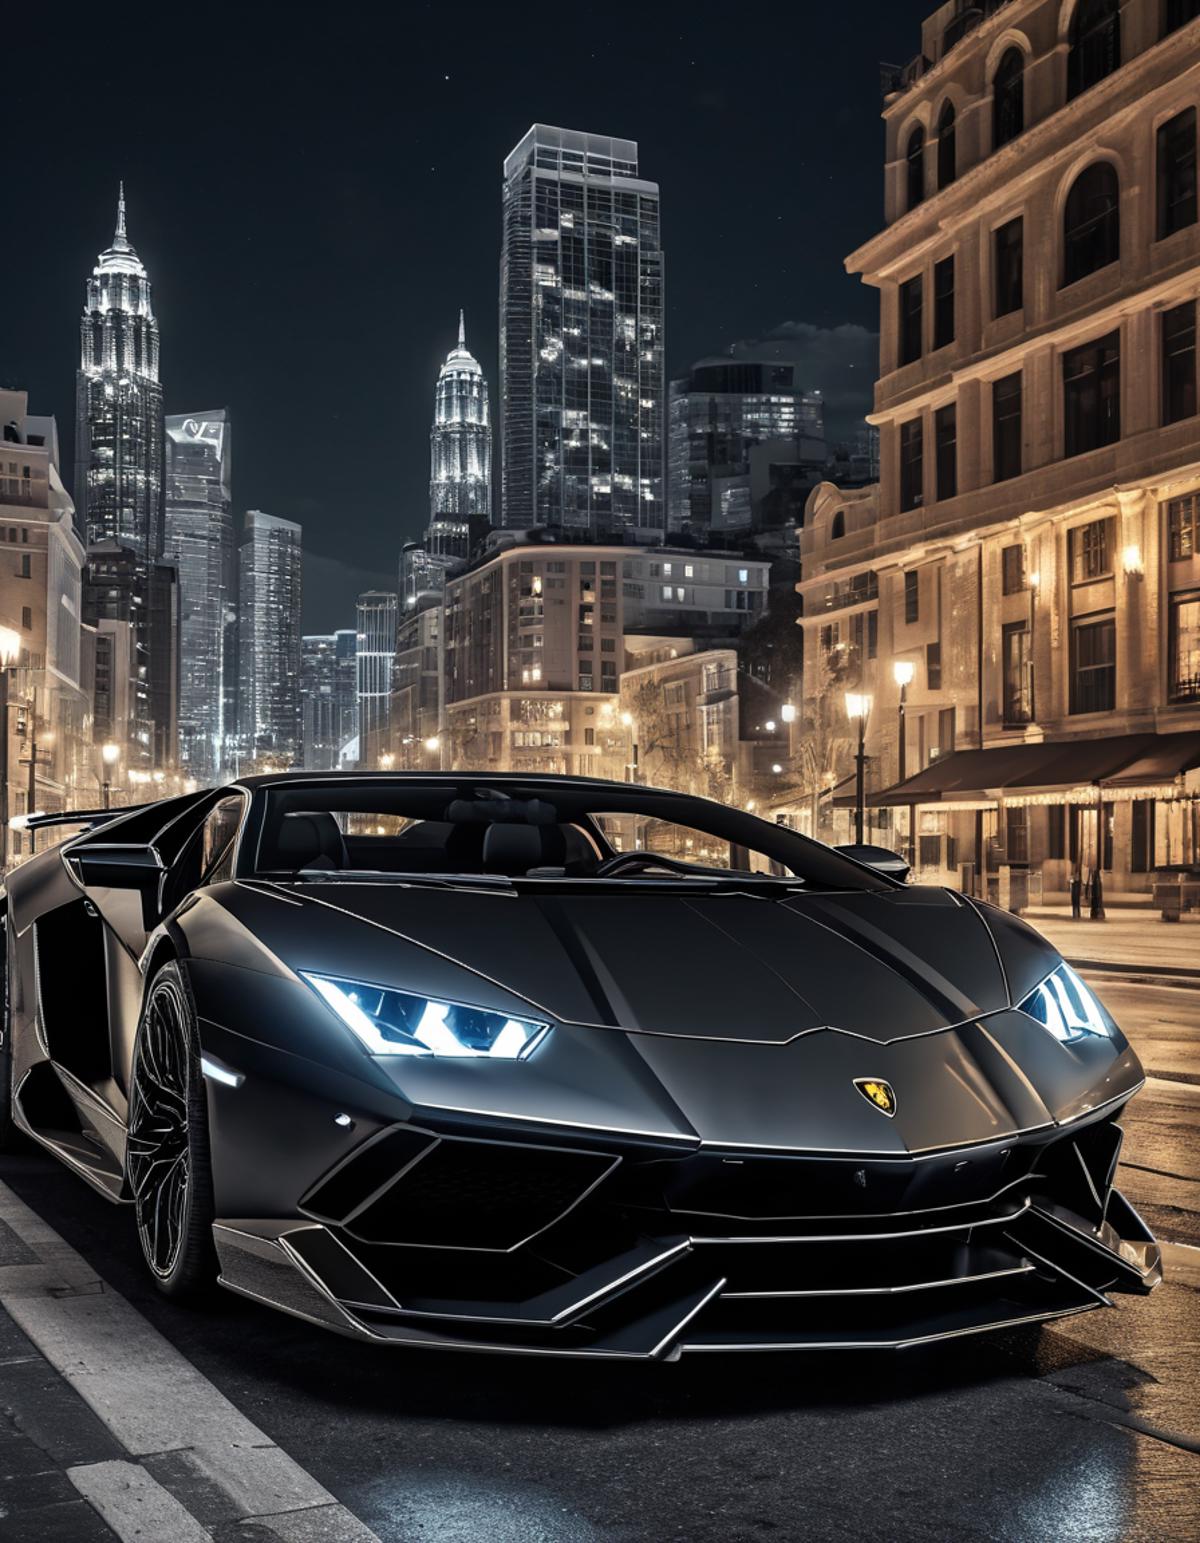 A Lamborghini sports car driving down a city street at night.